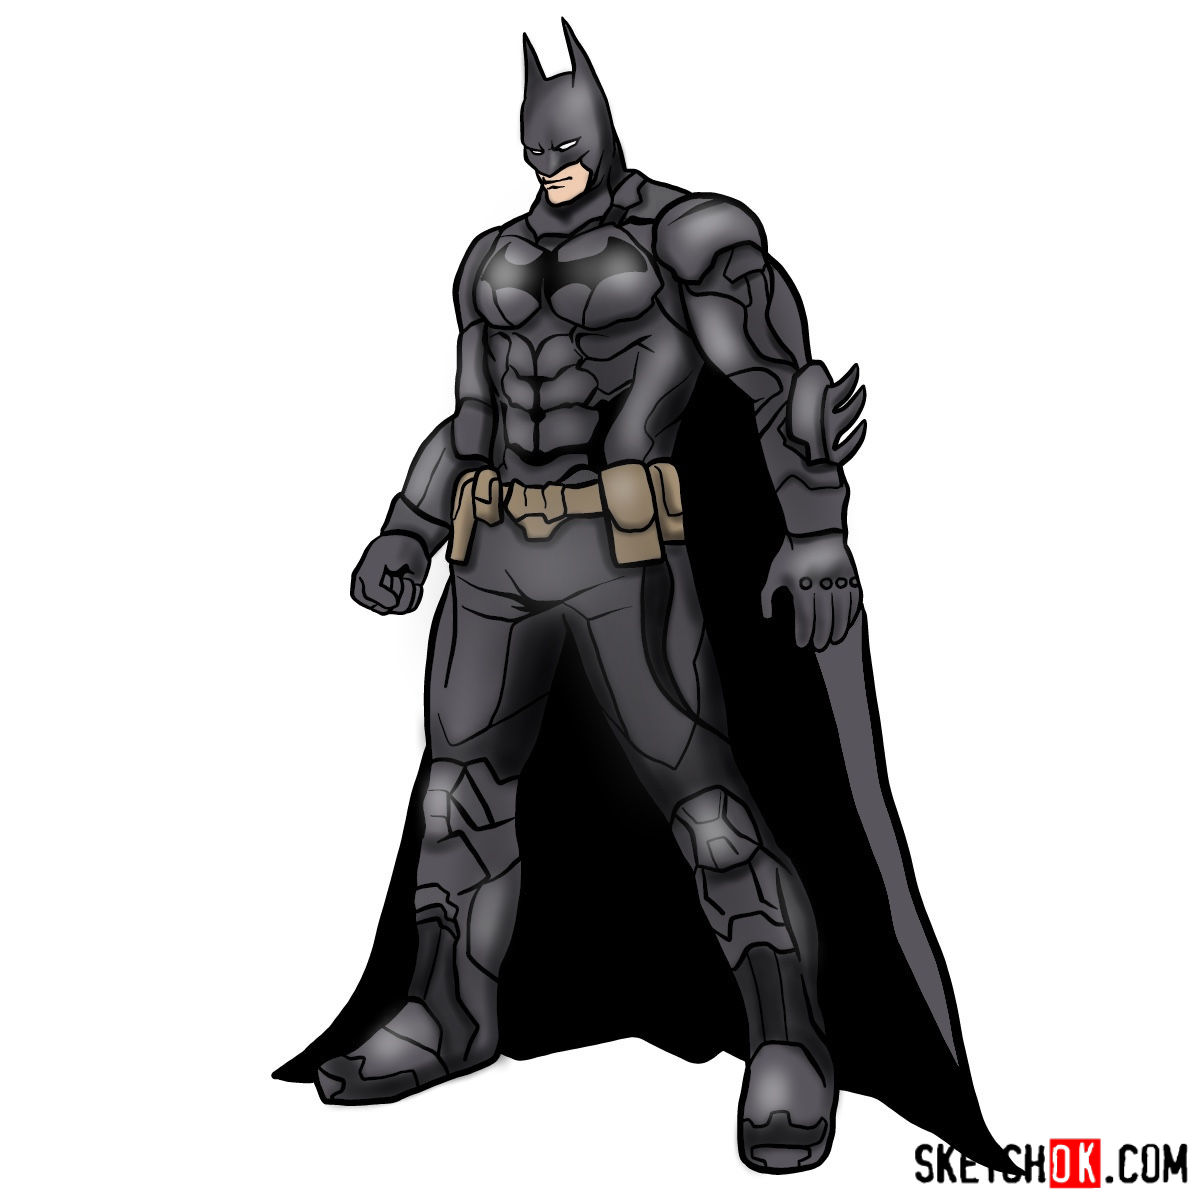 How to draw Batman the Dark Knight